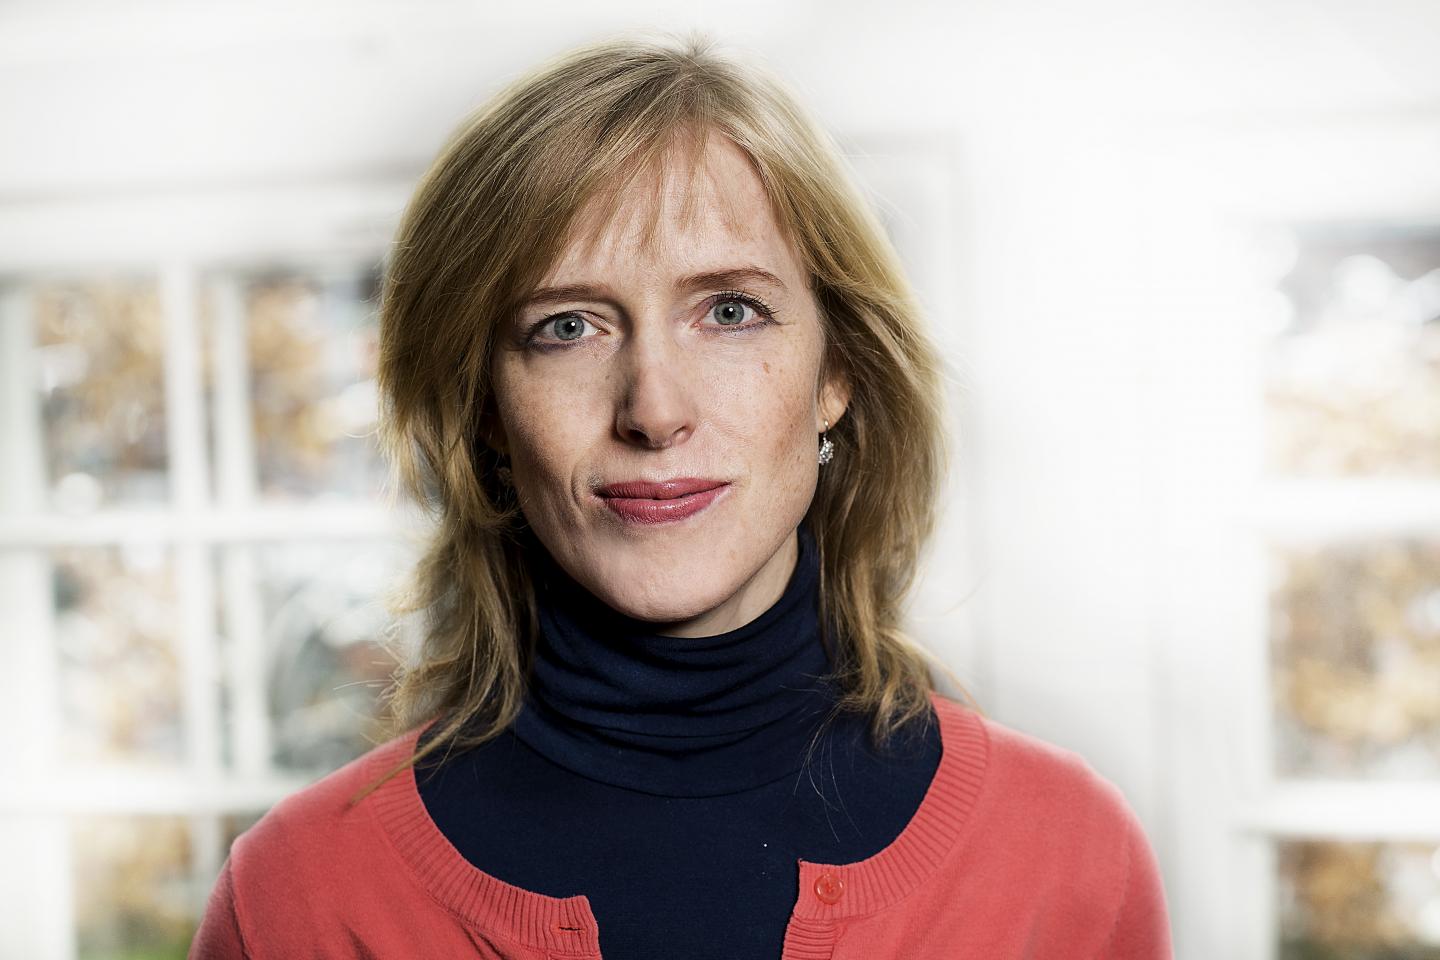 Neuropsychologist Hana Mála Rytter, Department of Psychology, University of Copenhagen